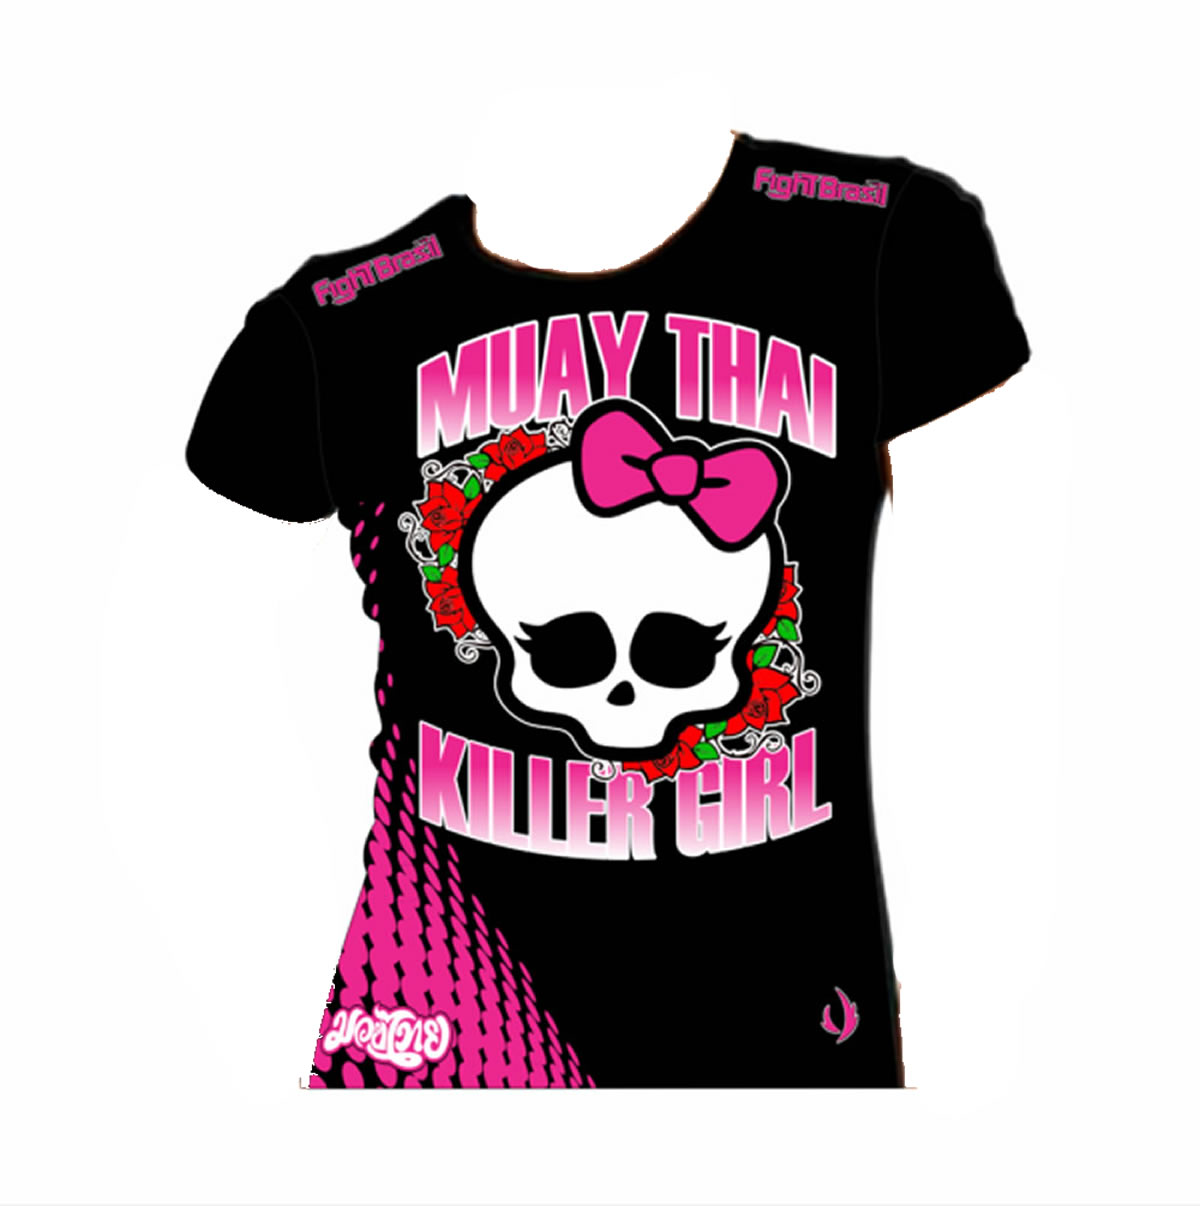 Camiseta Muay Thai Killer Girl - Baby Look Feminina - Fb-2045